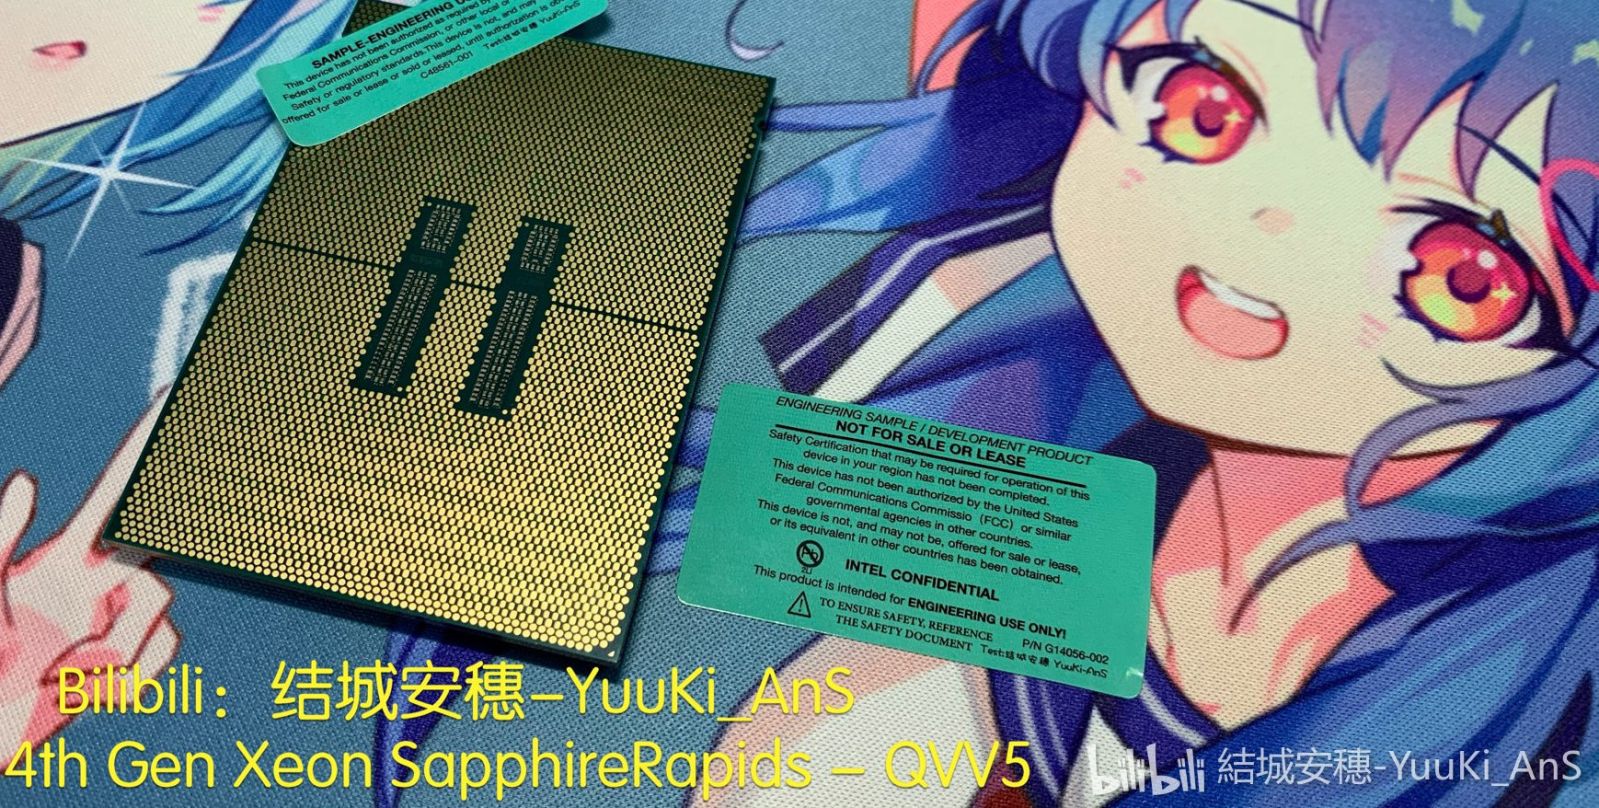 Intel-4th-Gen-Xeon-Sapphire-Rapids-1.jpg